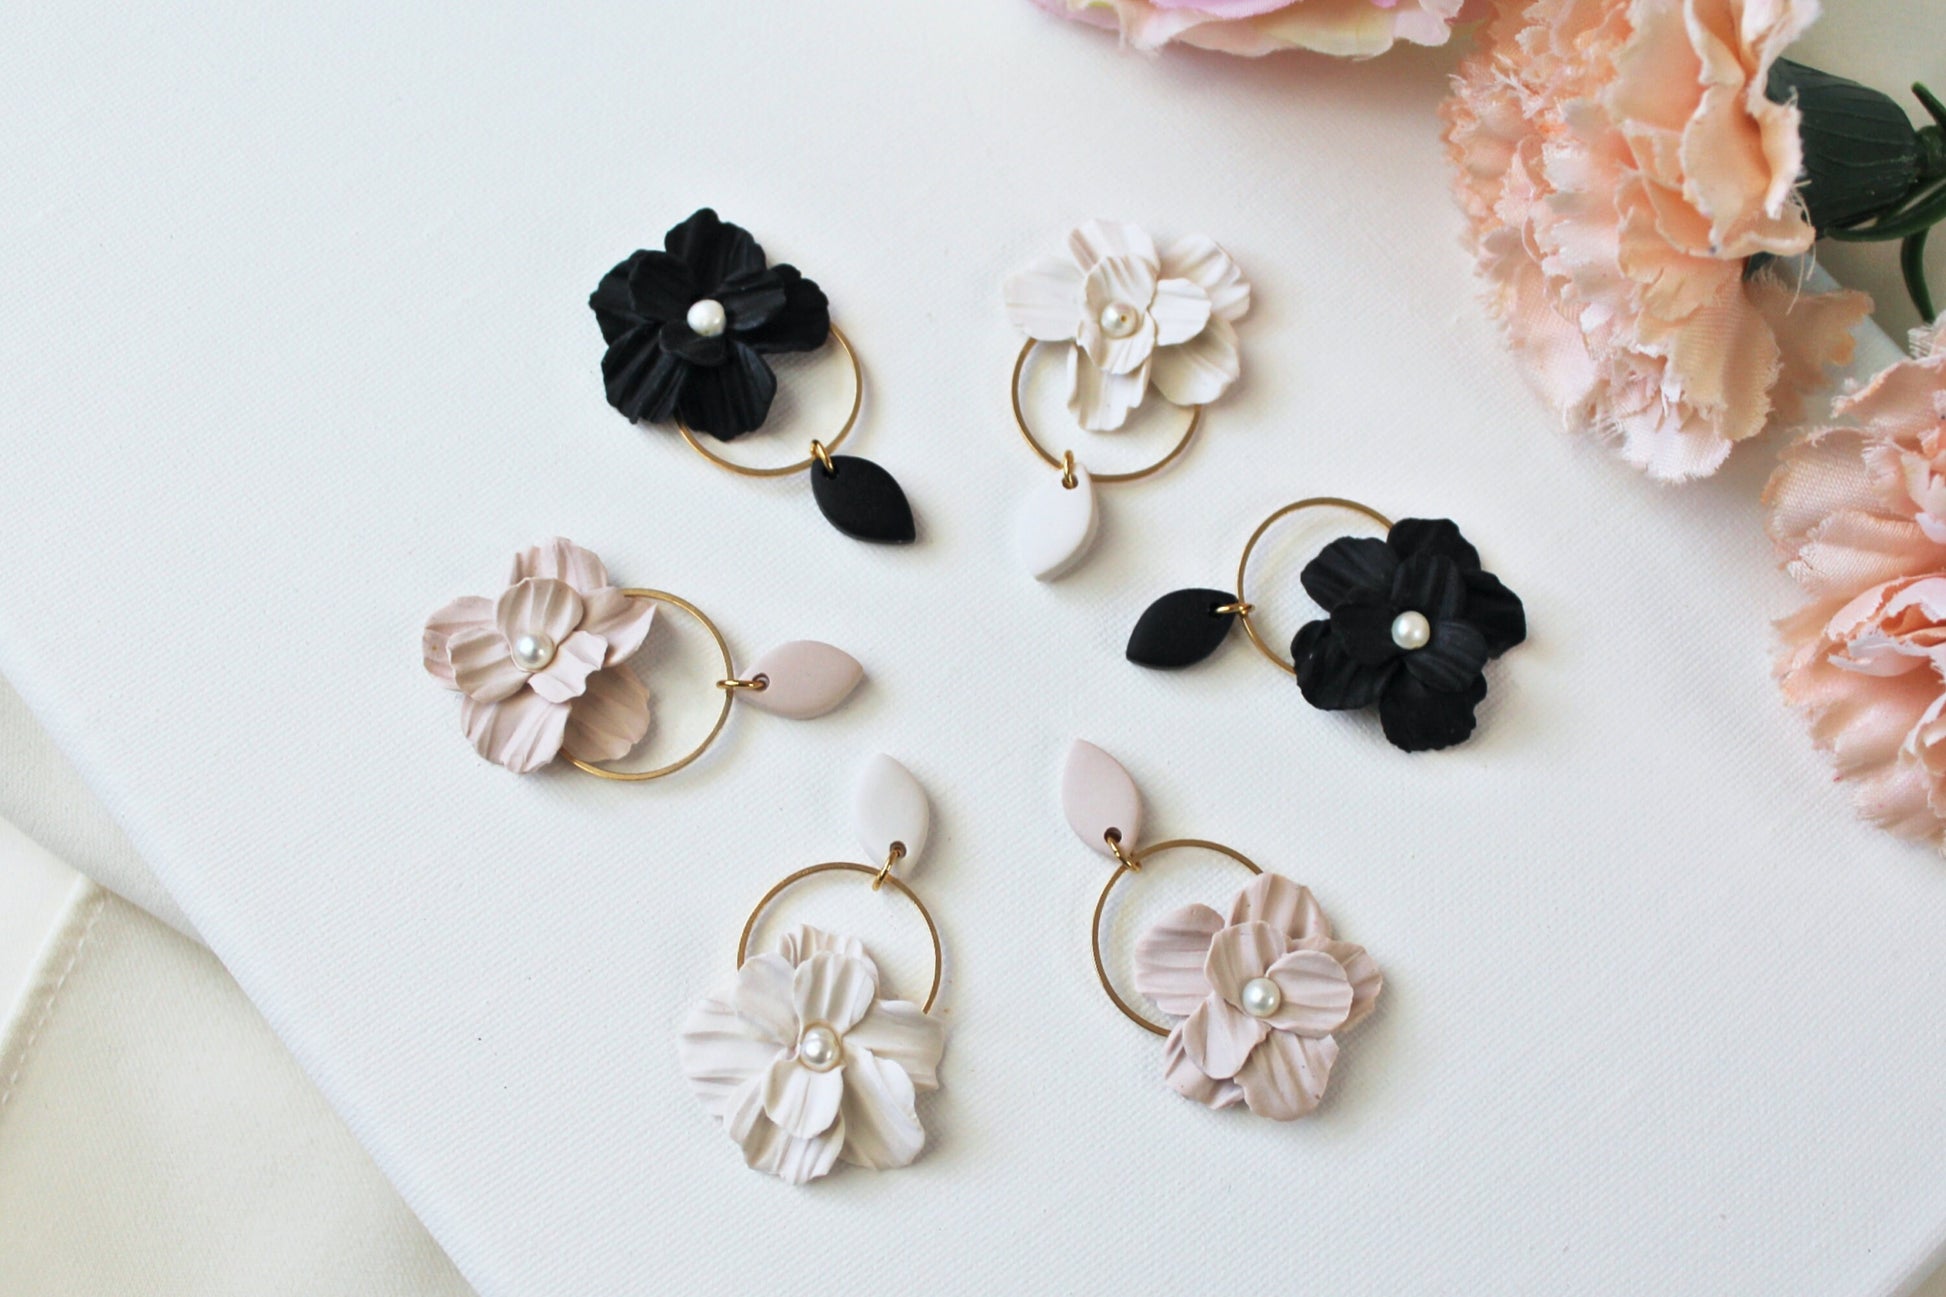 Handmade Polymer Clay Earrings: Love More Black, Gold, White